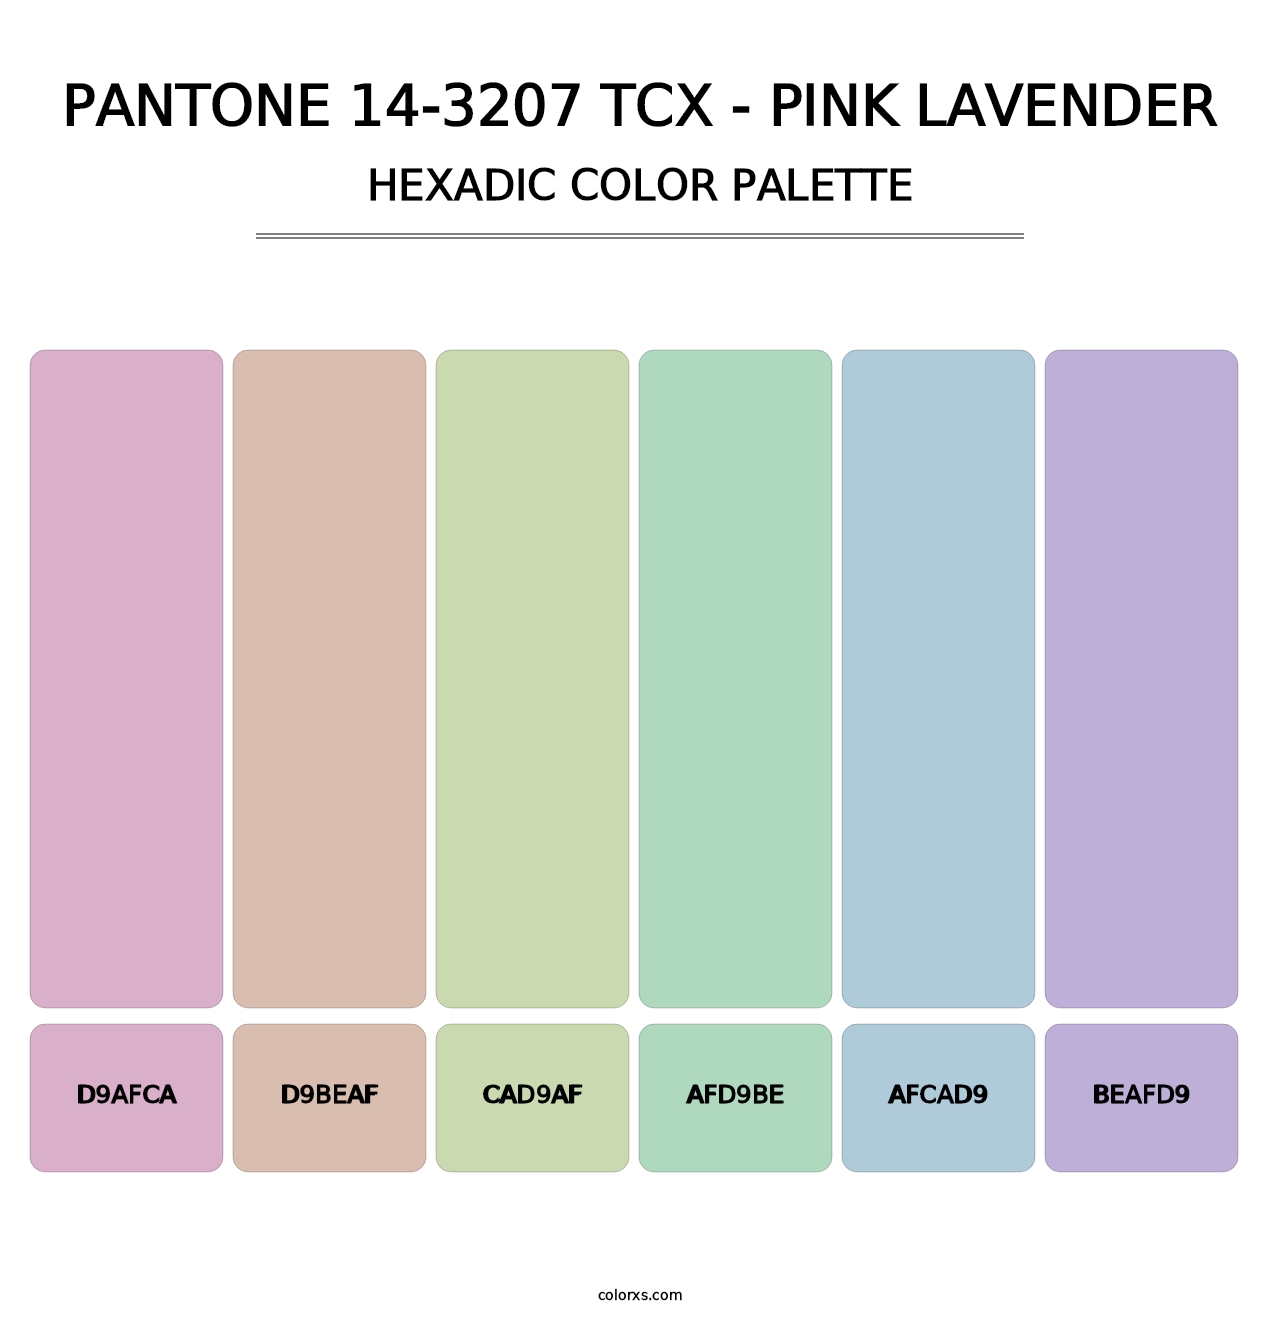 PANTONE 14-3207 TCX - Pink Lavender - Hexadic Color Palette